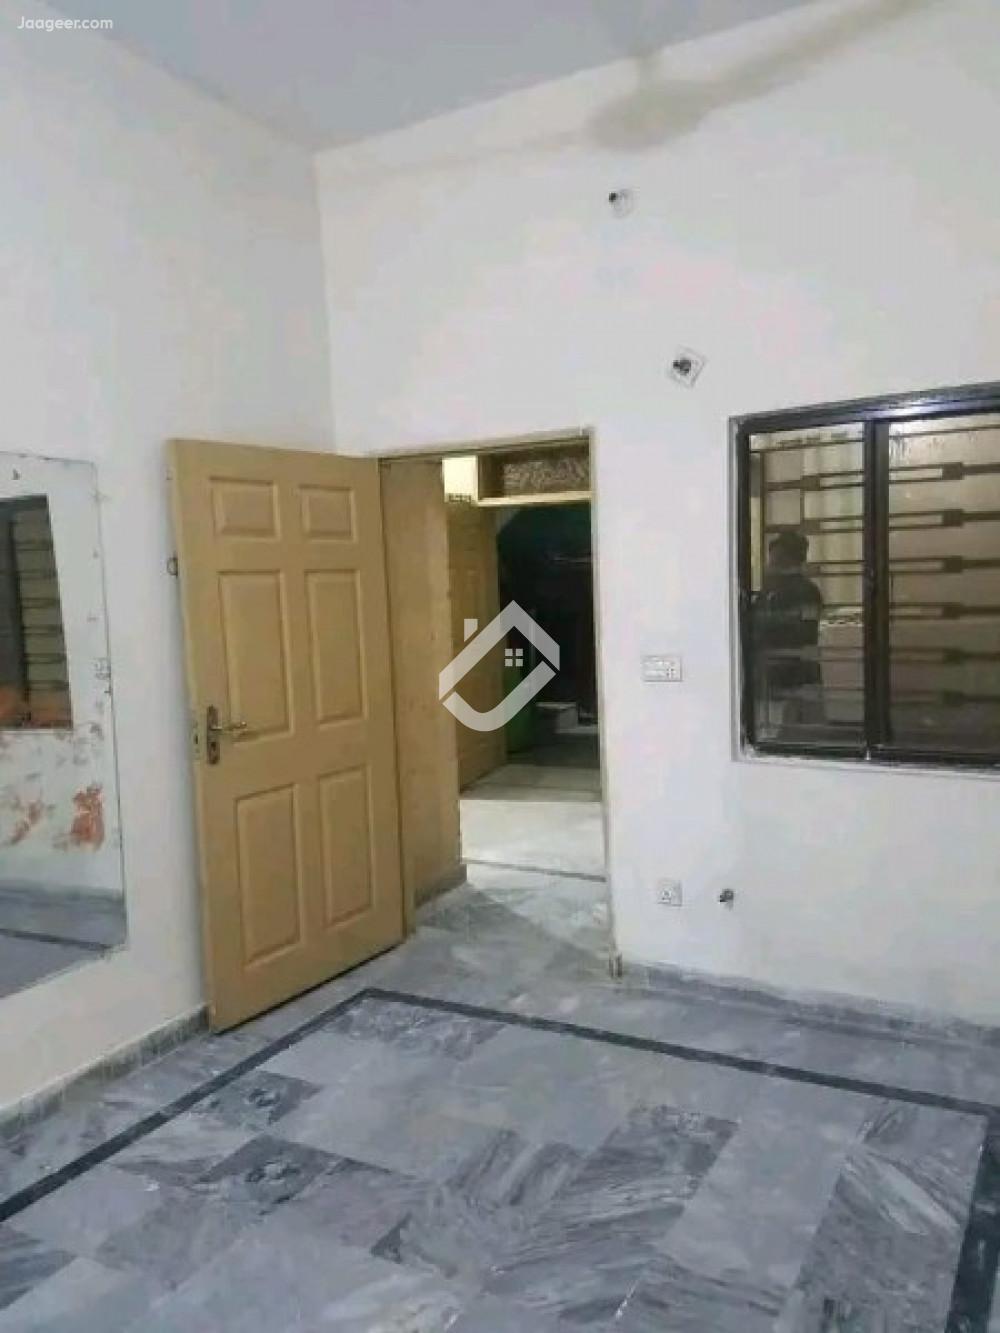 Main image 3 Marla Upper Portion For Rent In Wakeel Colony Near Gulzrar-E- Quaid   Wakeel Colony near Gulzar E Quid Rawalpindi